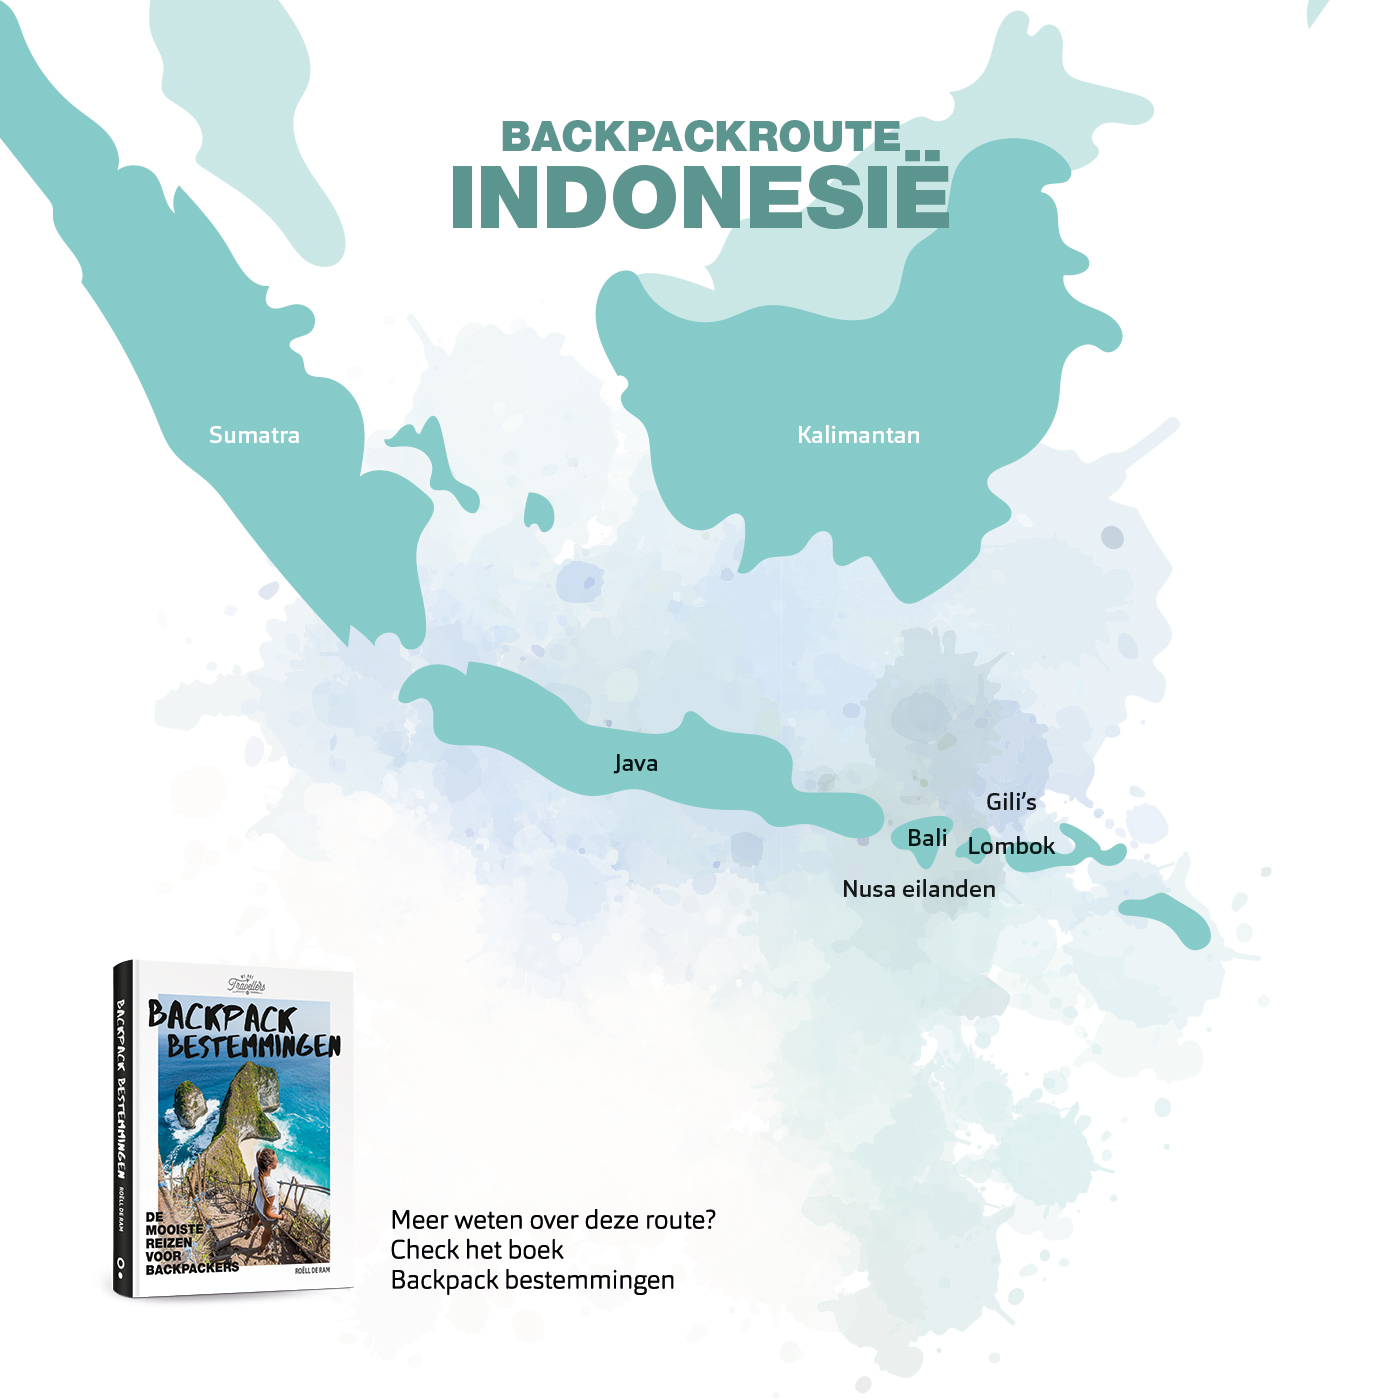 Gili eilanden backpack route indonesie boek backpack bestemmingen